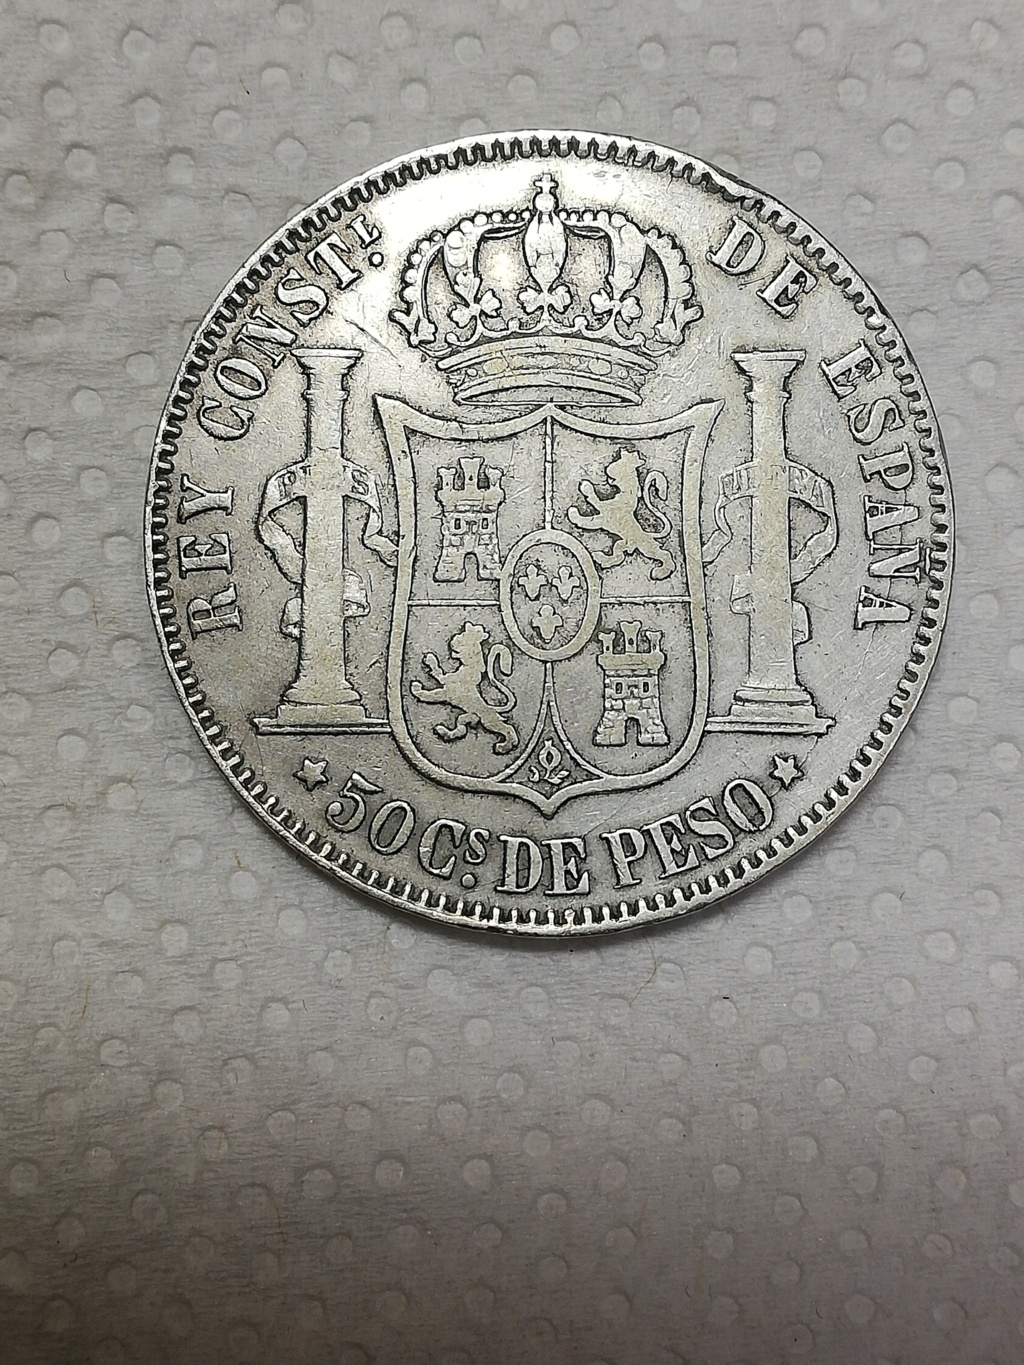 50ctmos.de peso,1883.filipinas. Img_2521